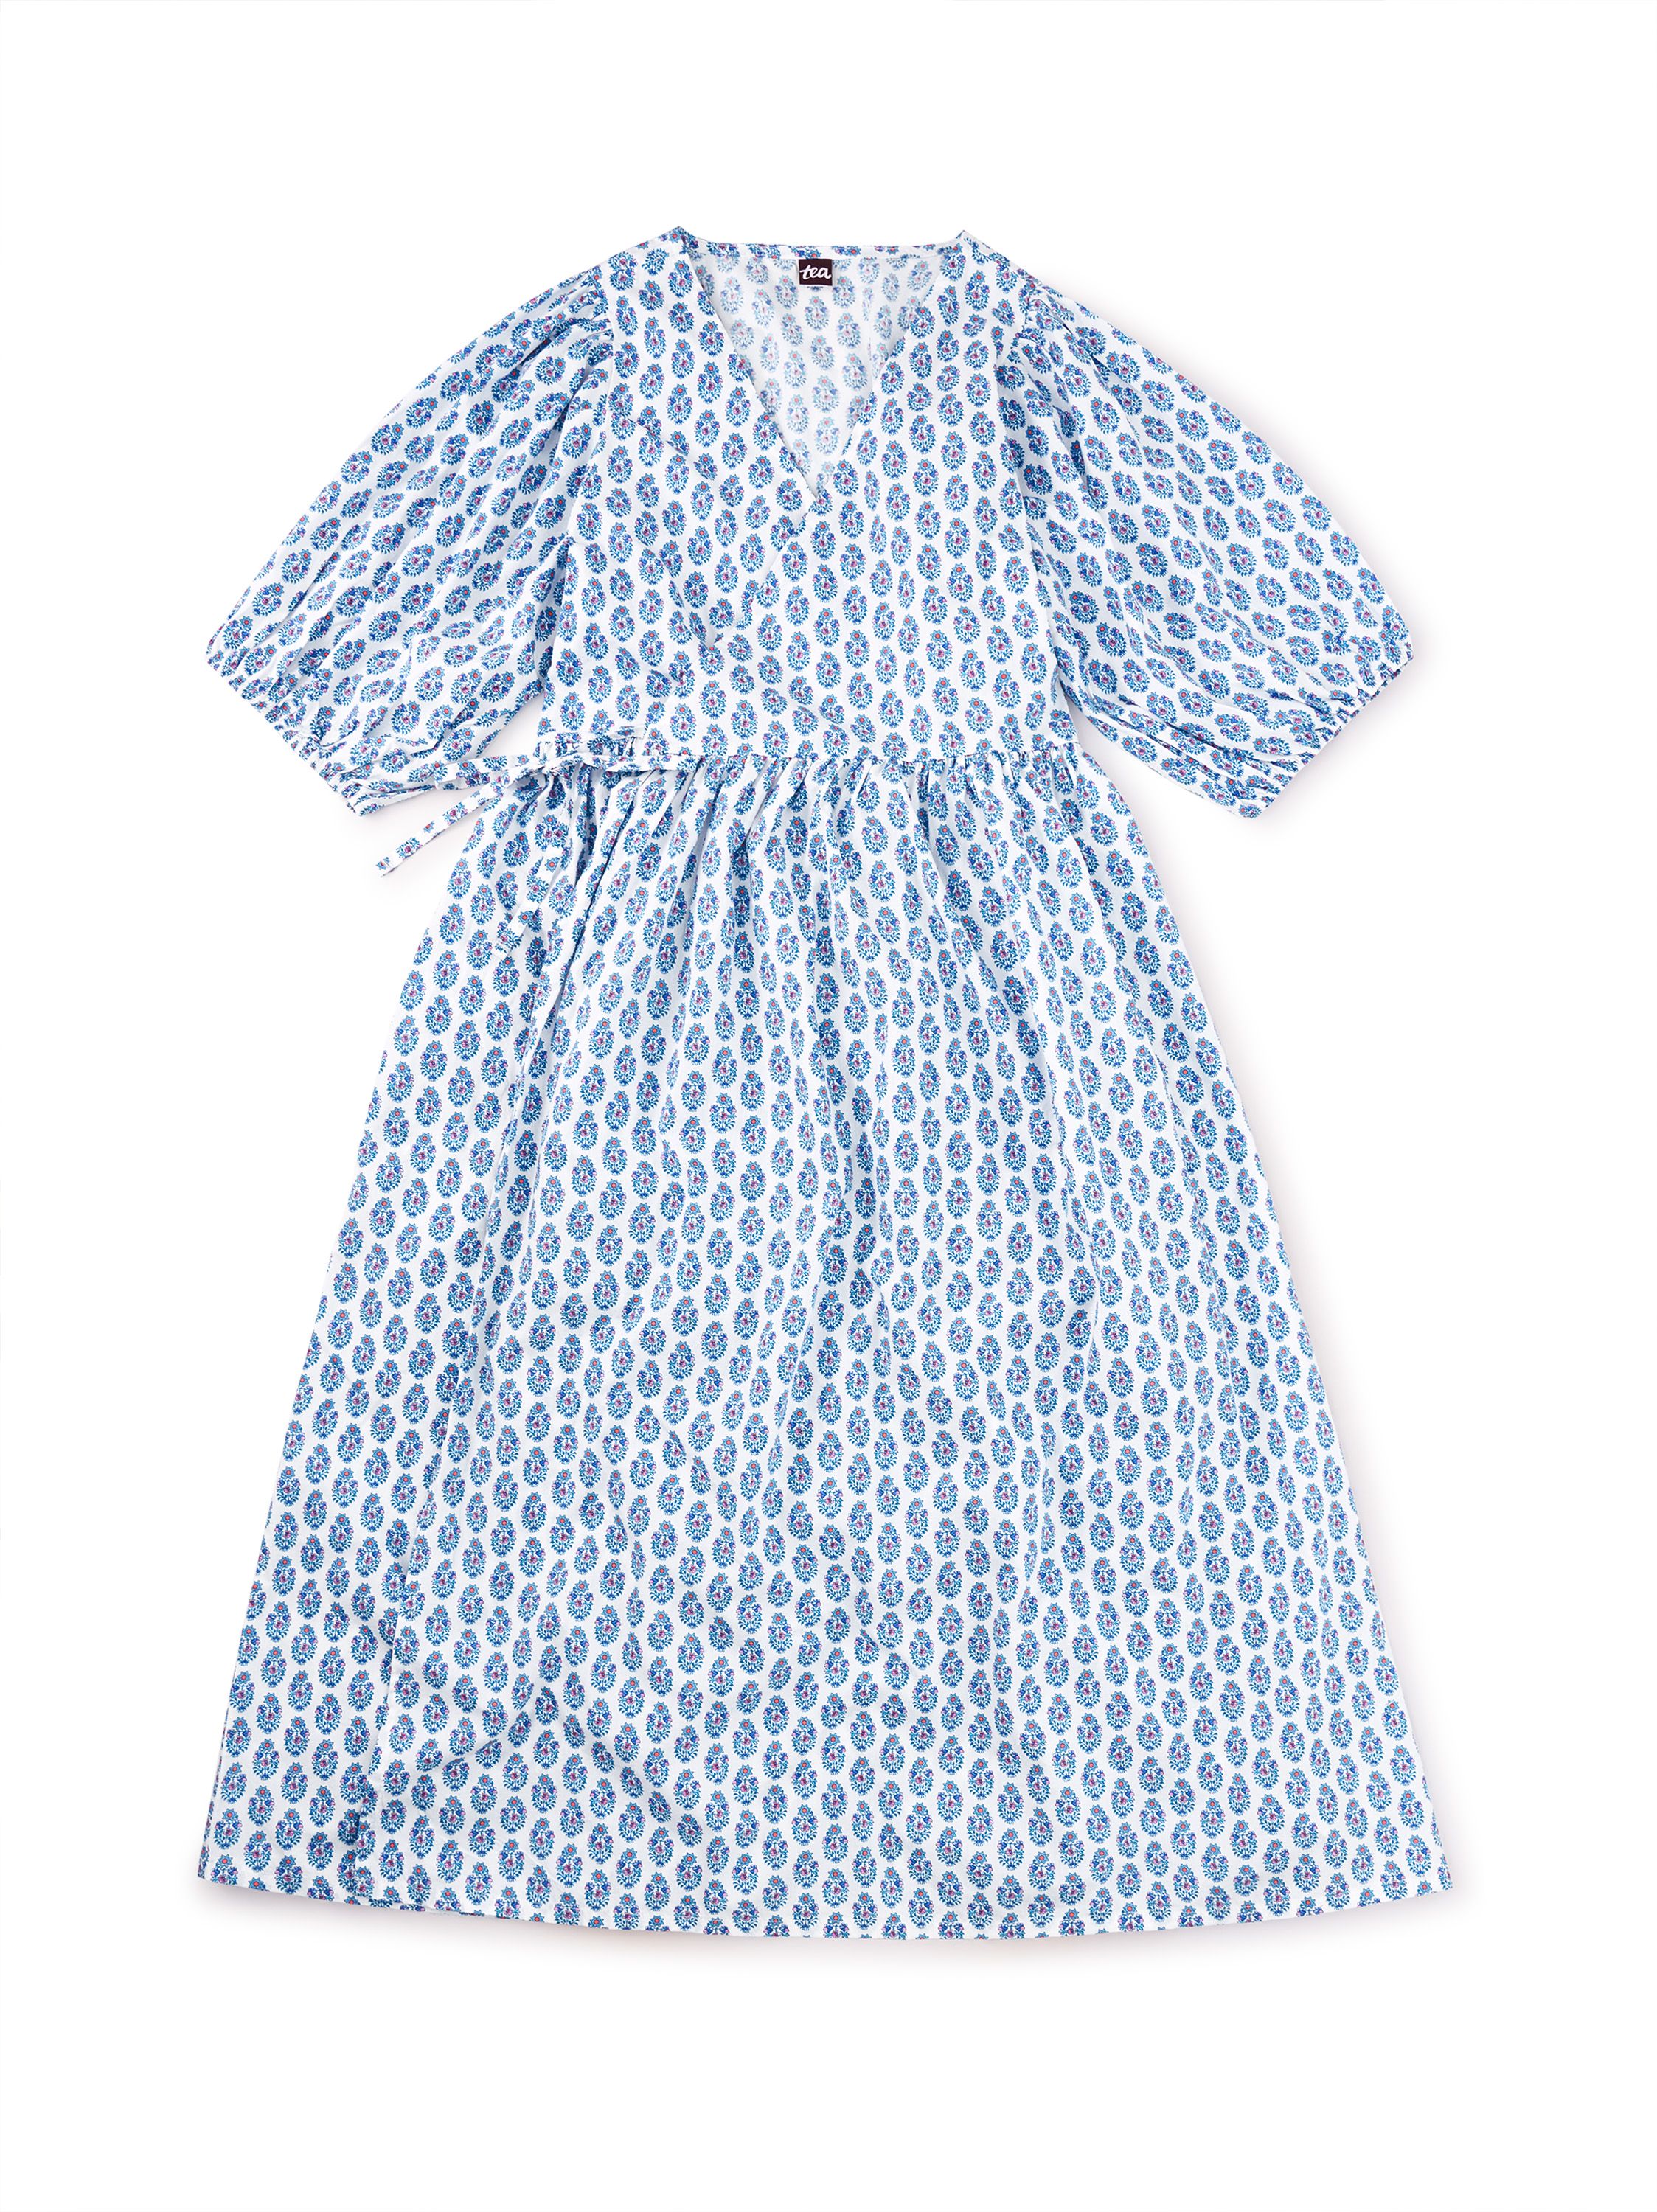 Adult Wrap Dress | Tea Collection